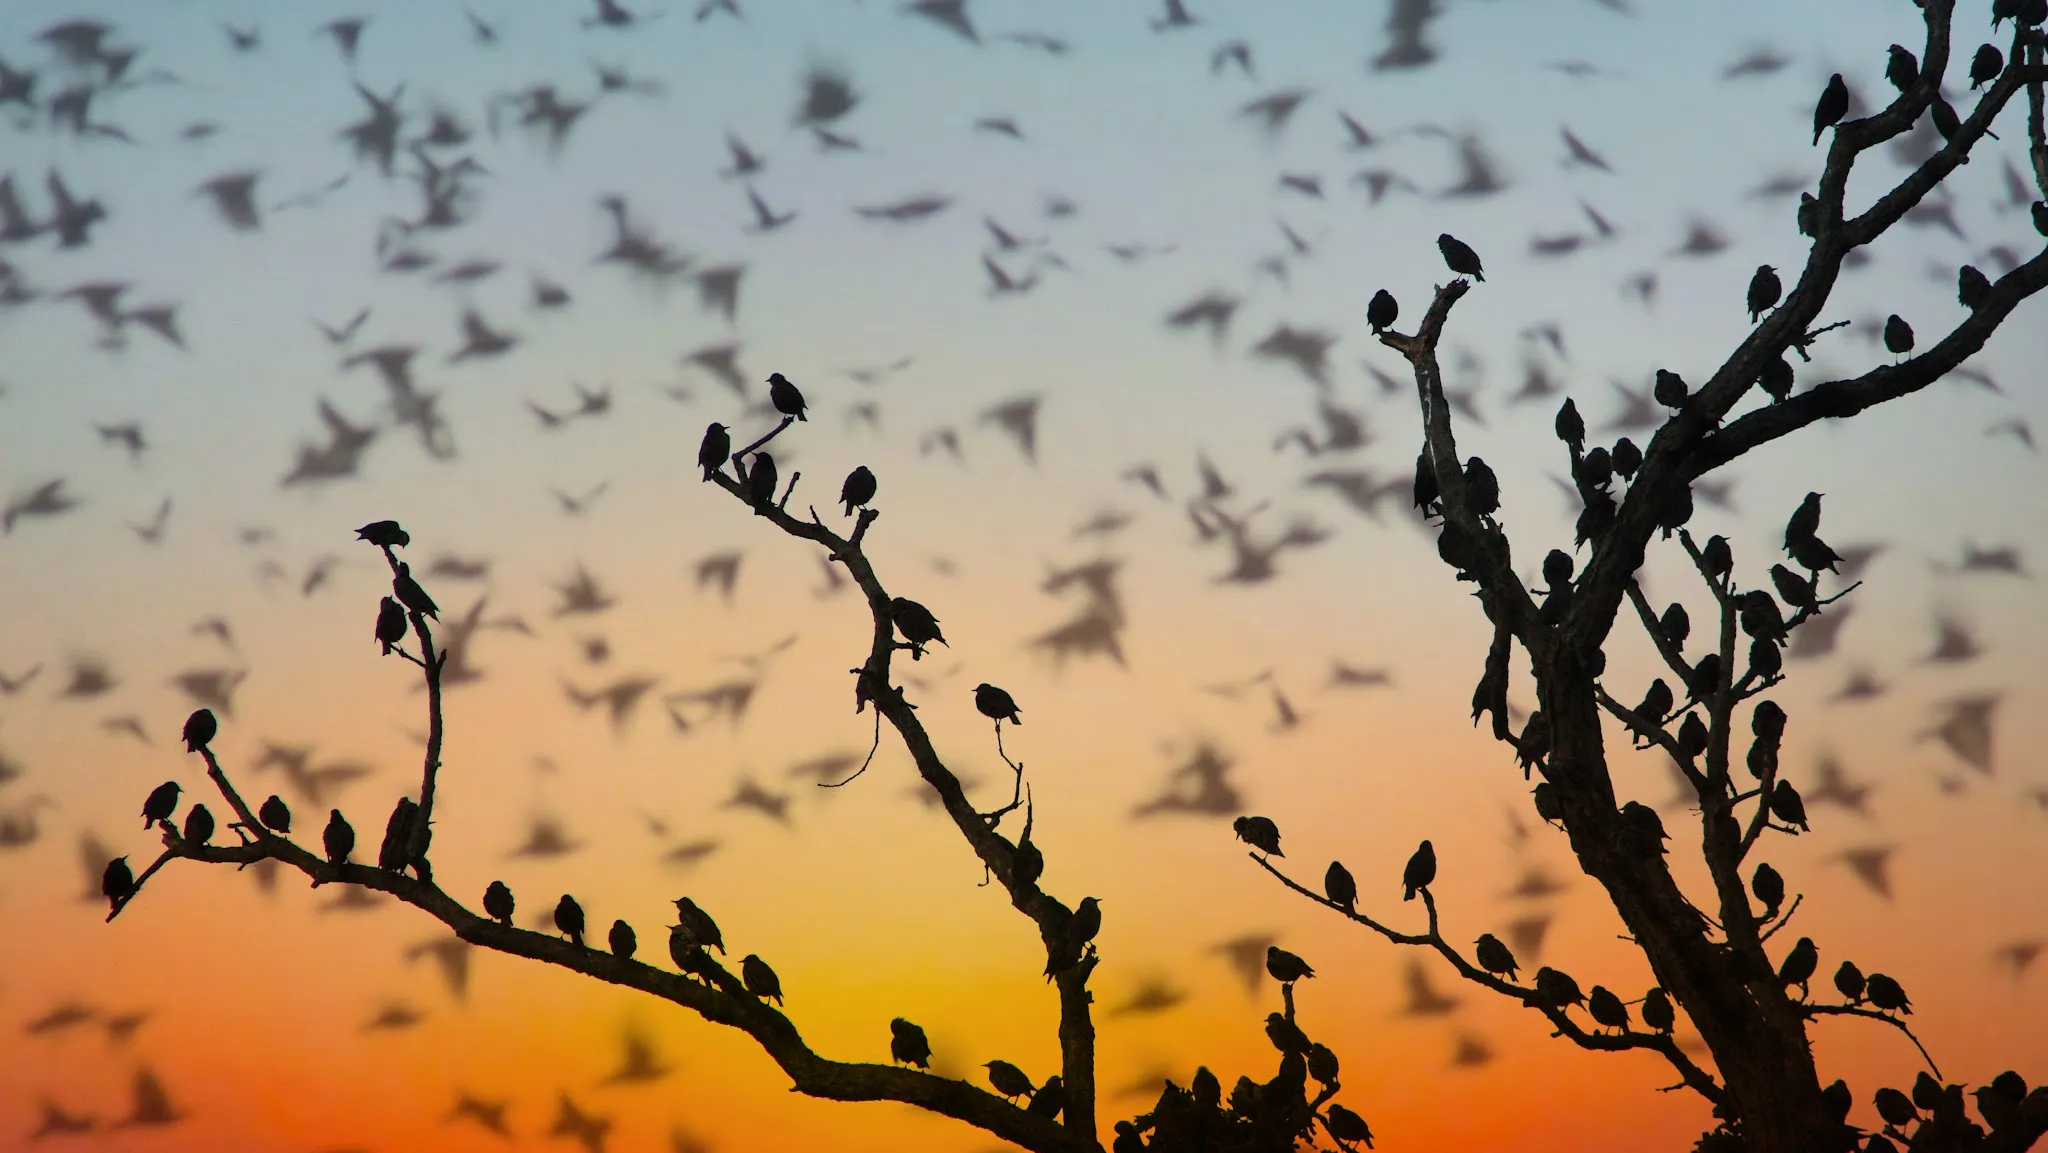 Птицы на дереве. Миграция птиц. Стая птиц на дереве. Дерево солнце птицы.